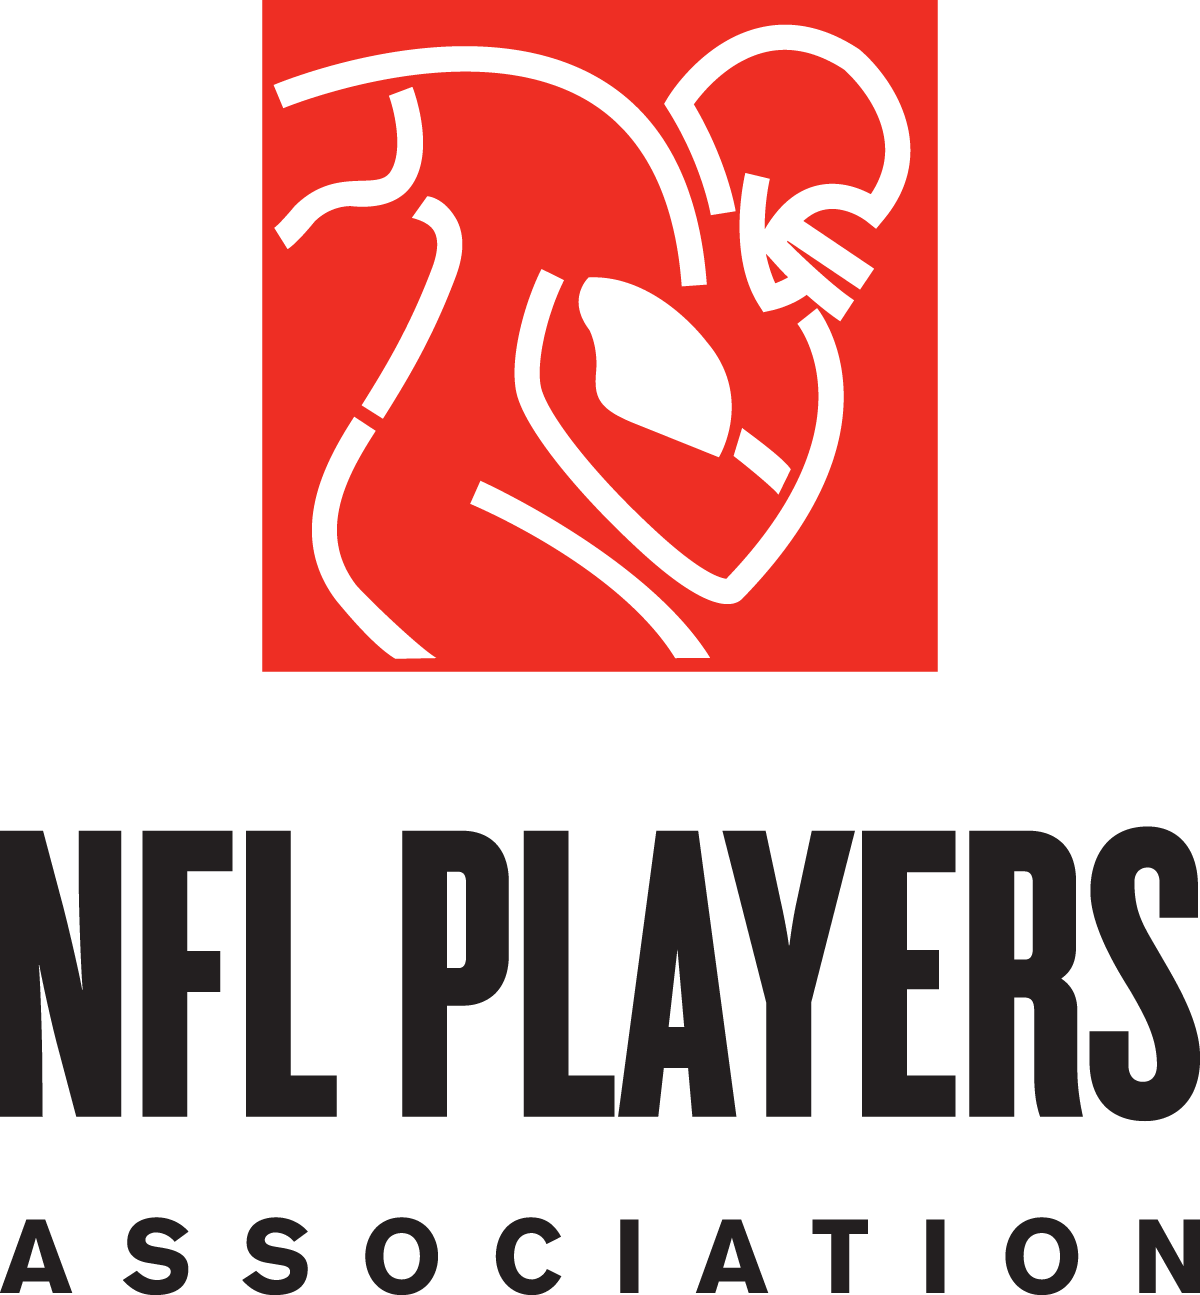 File:NFLPA logo.png - Wikipedia, the free encyclopedia